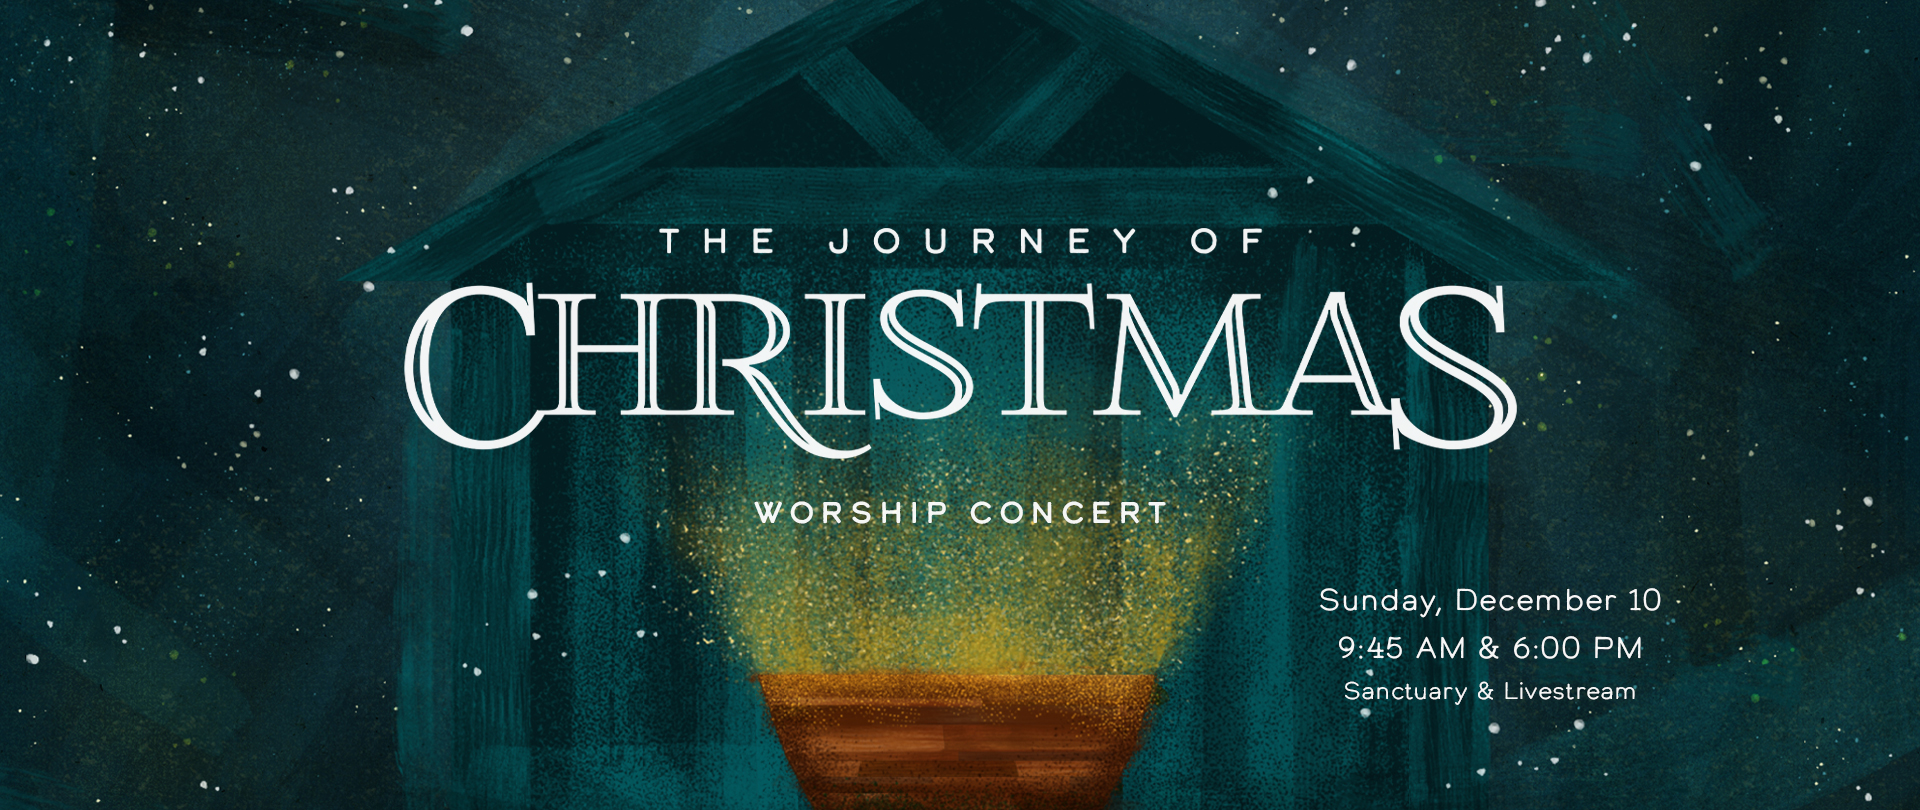 Christmas Concert
Sunday, December 10
9:45 AM & 6:00 PM
